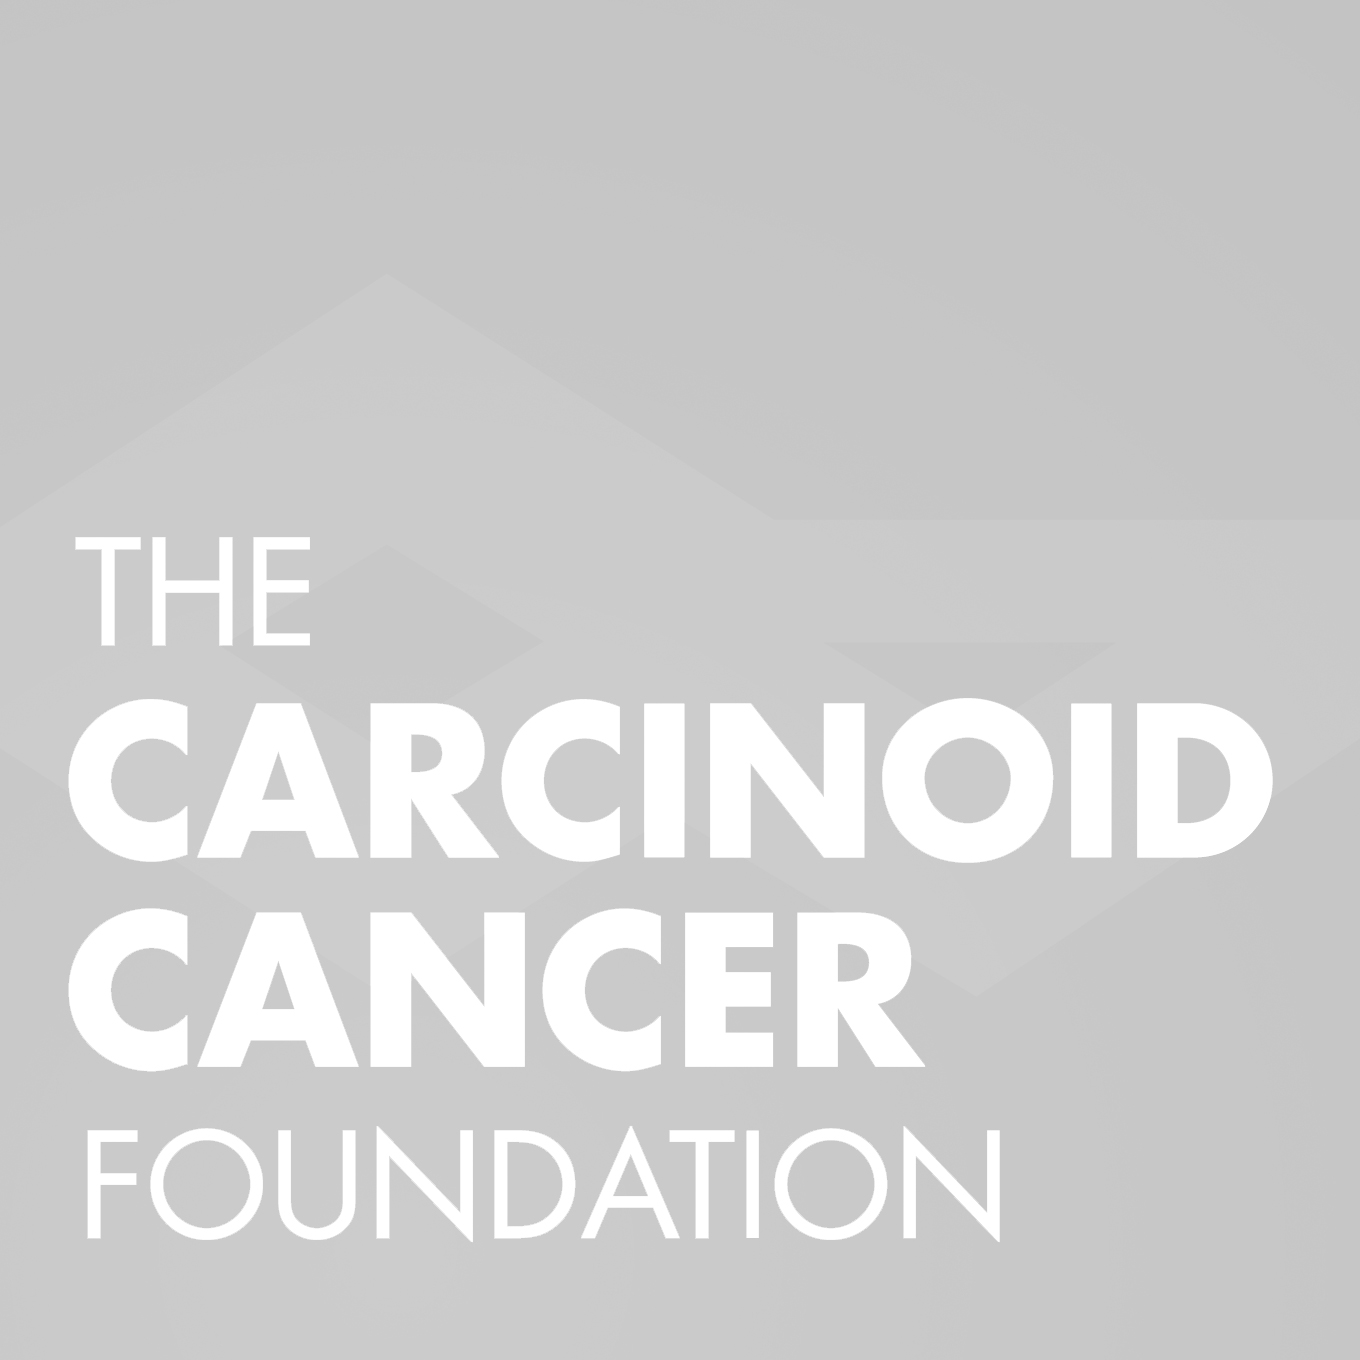 The Carcinoid Cancer Foundation